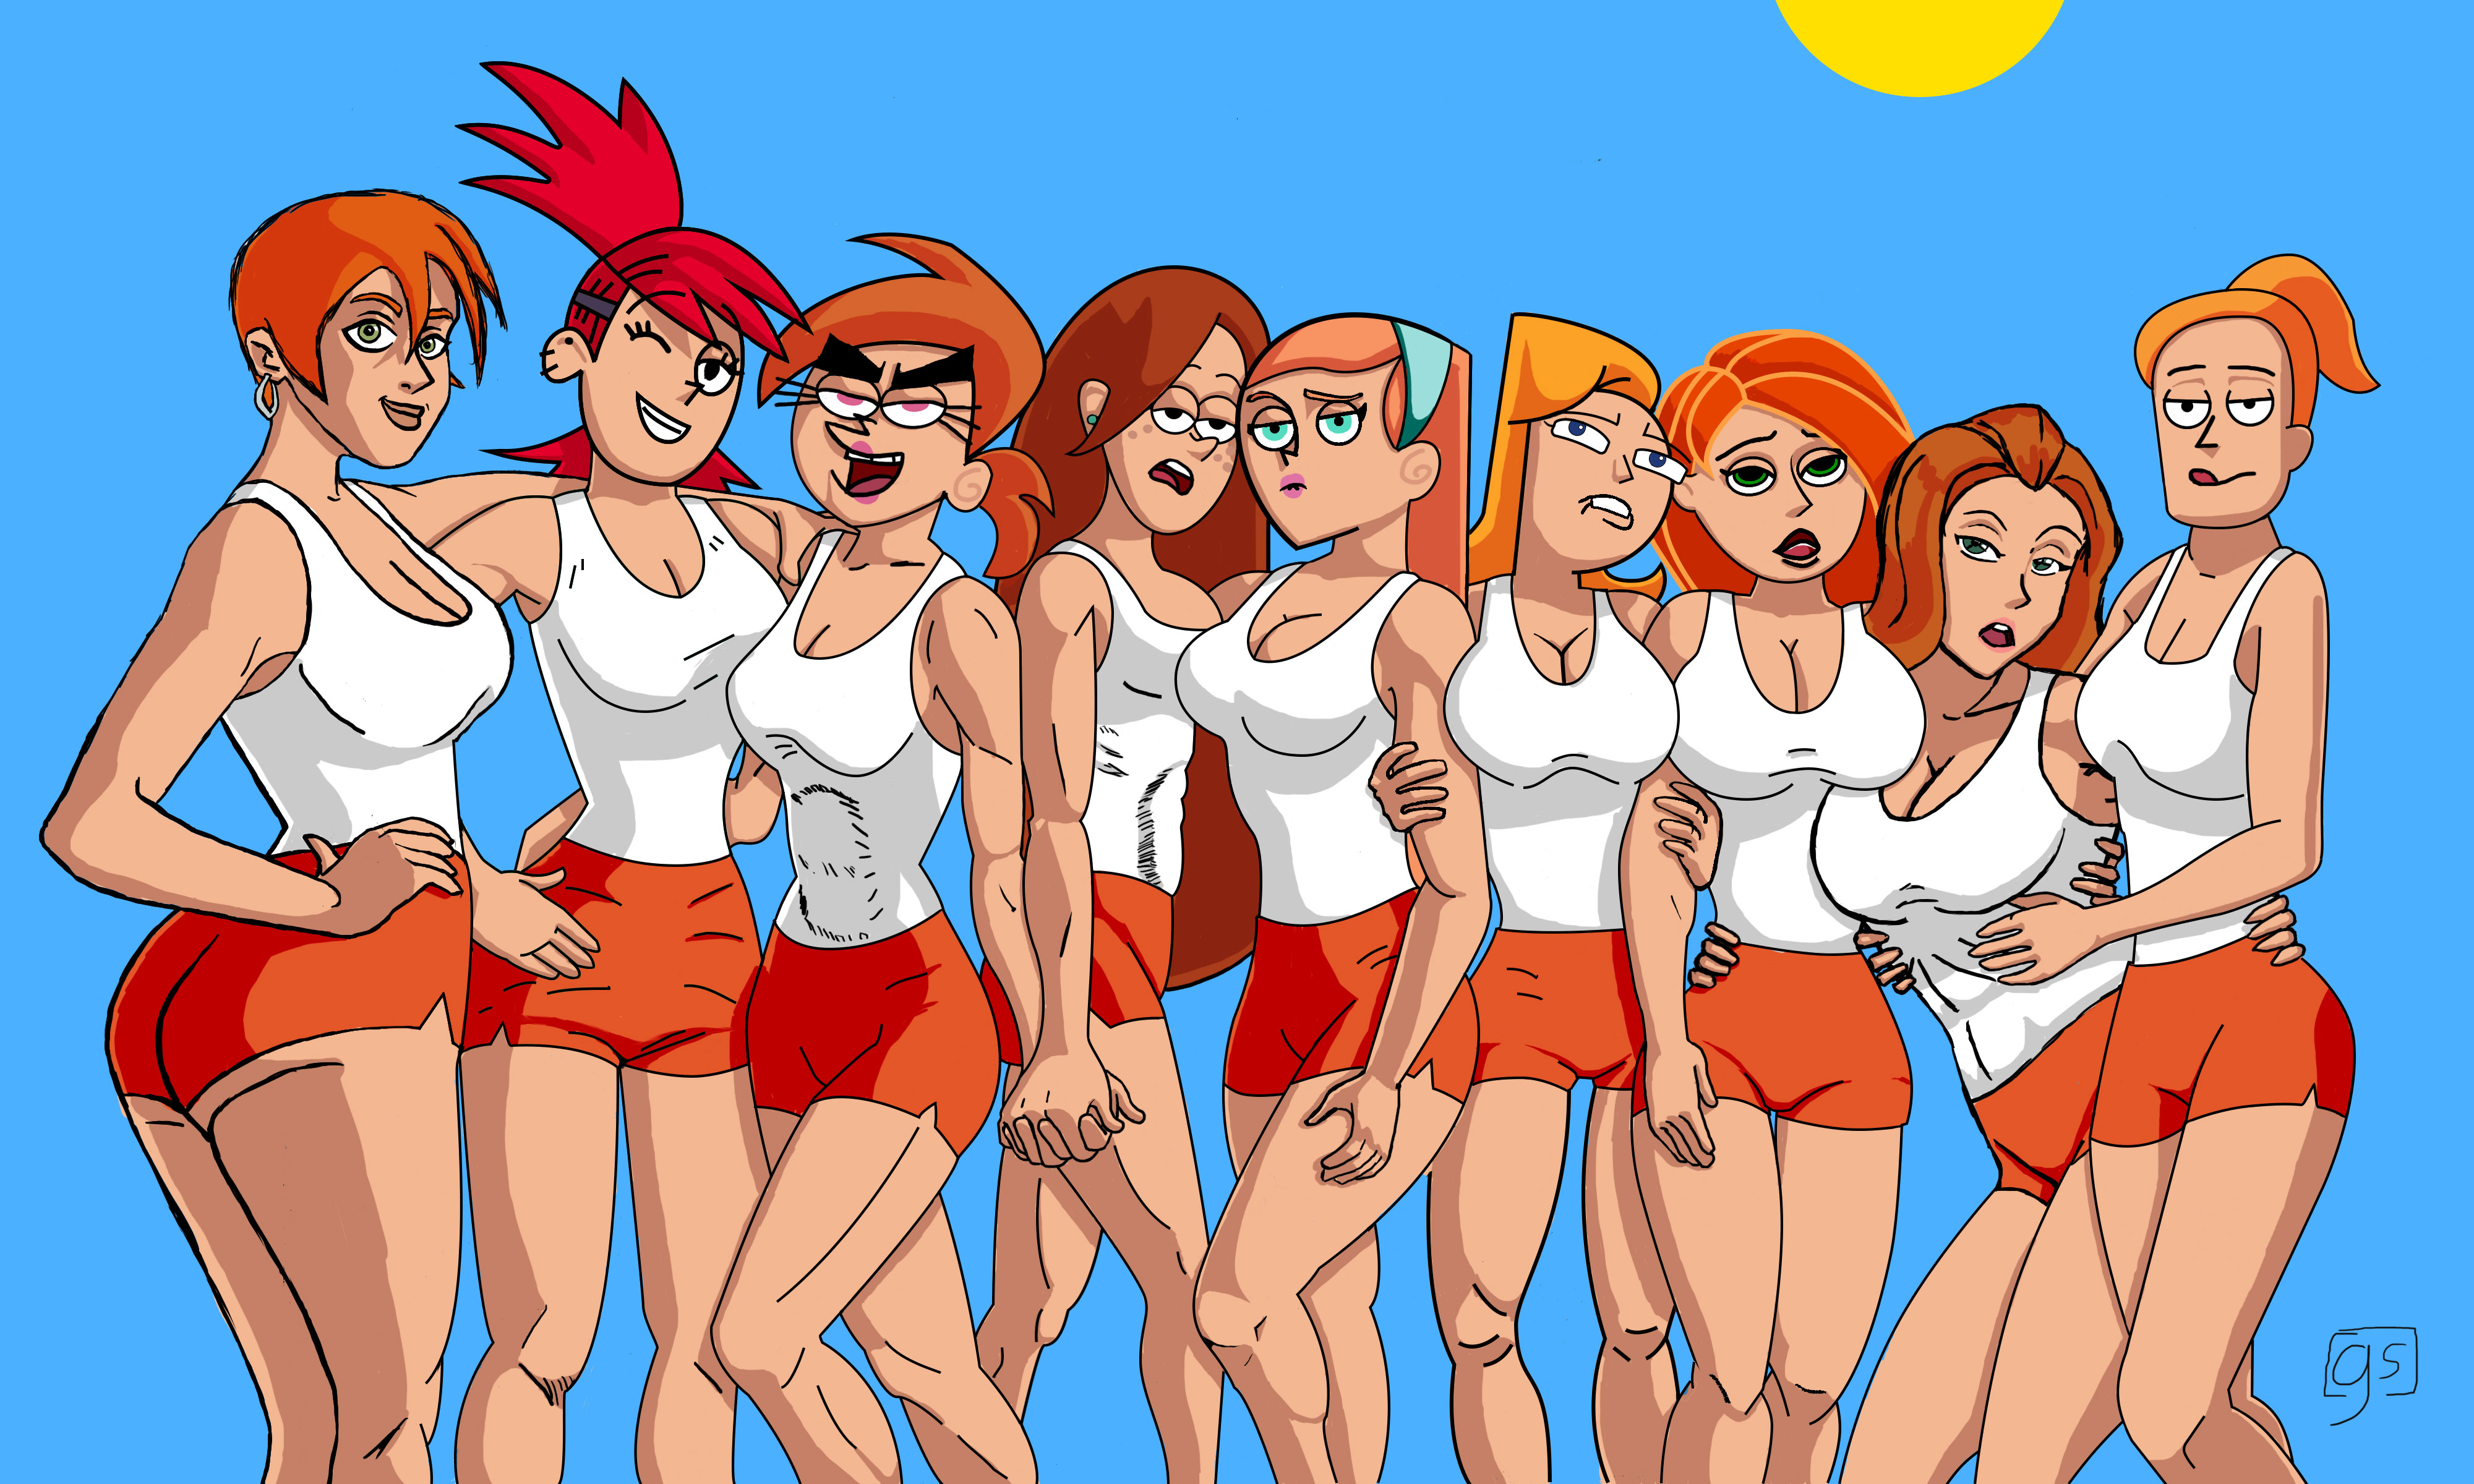 Cartoon Redheads by Glass Seagull.jpg 